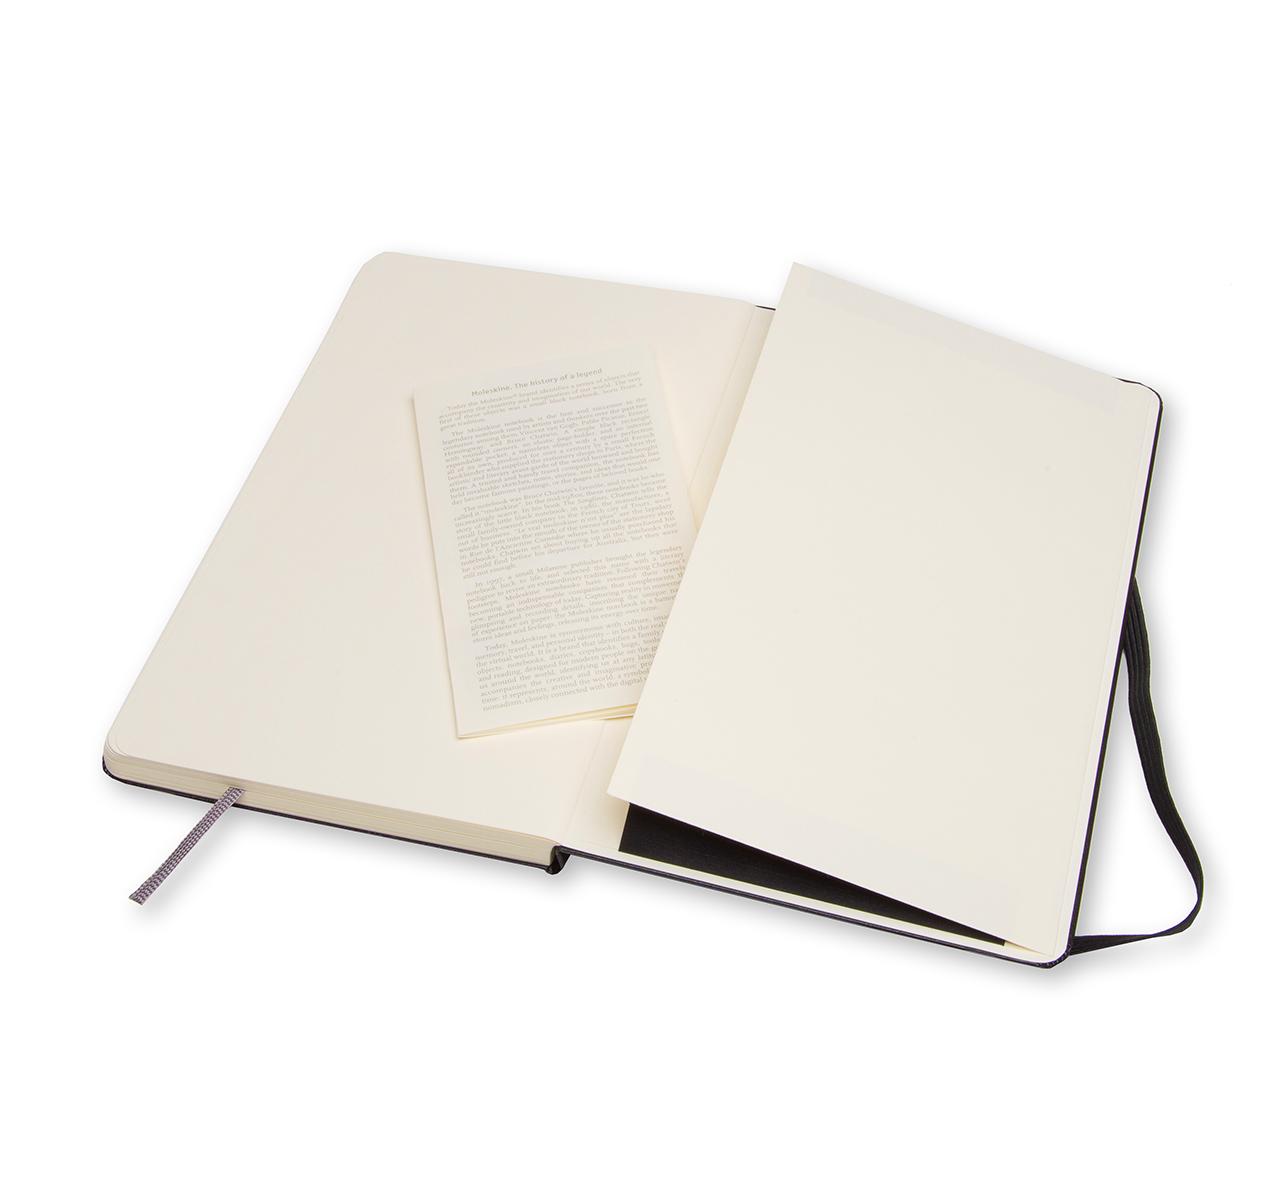 Записная книжка Moleskine Sketchbook (скетчбук для рисунков), Large (13х21см), черная